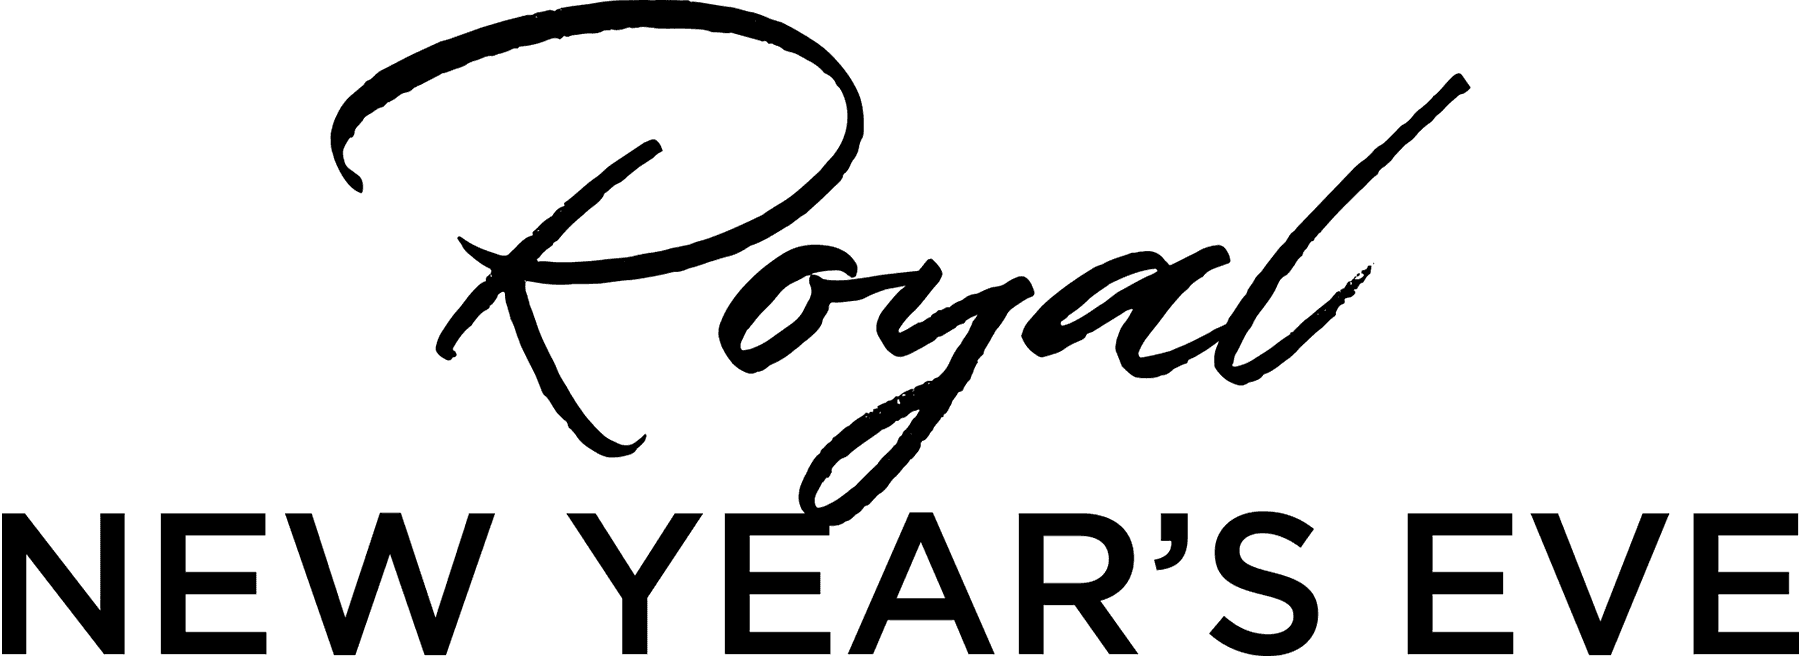 Royal New Year's Eve logo